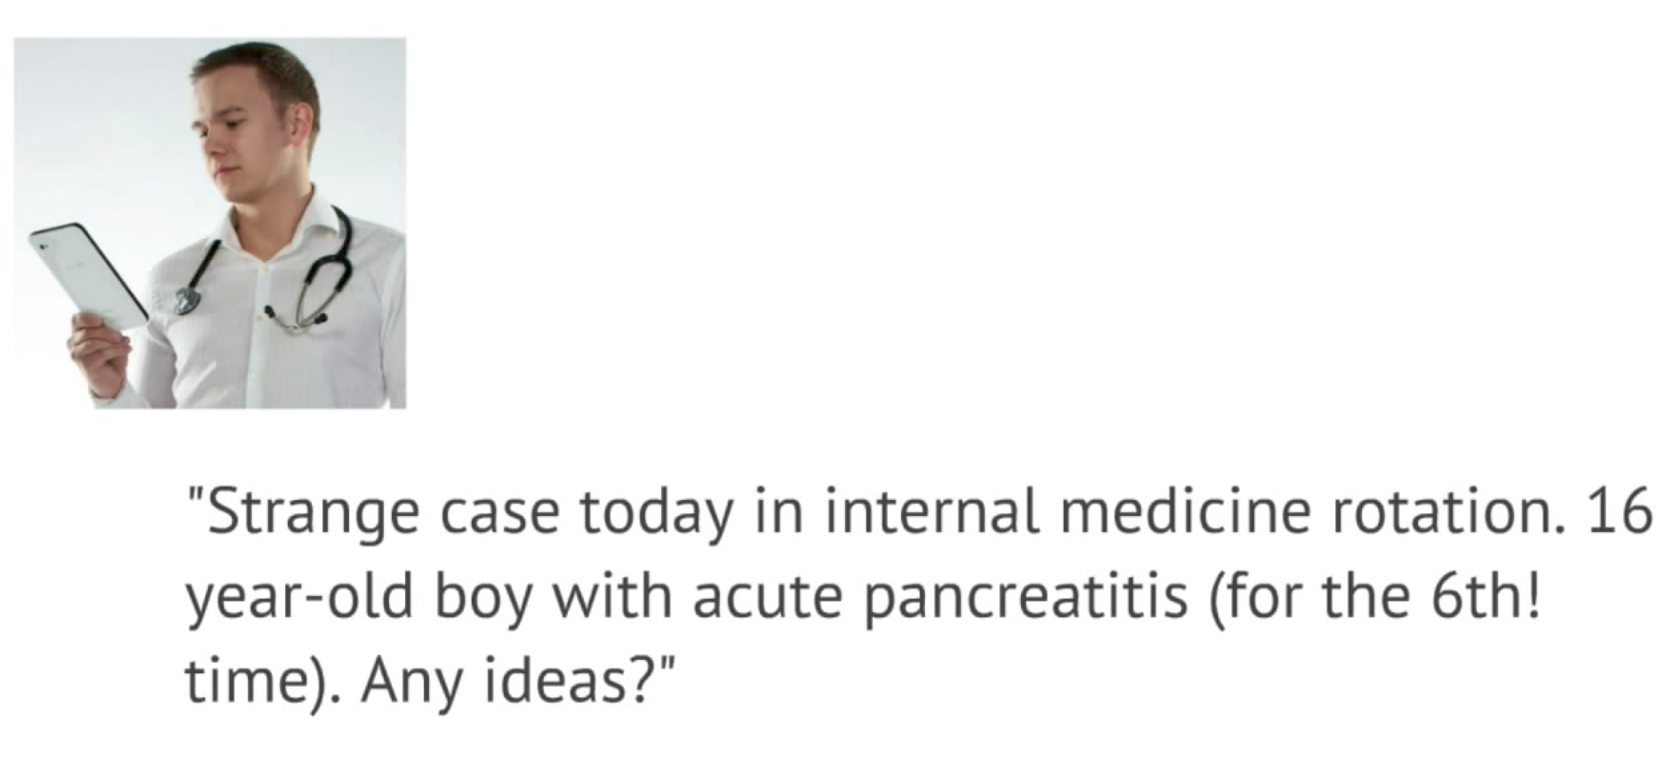 Marmotazos-Health-Pancreatitis